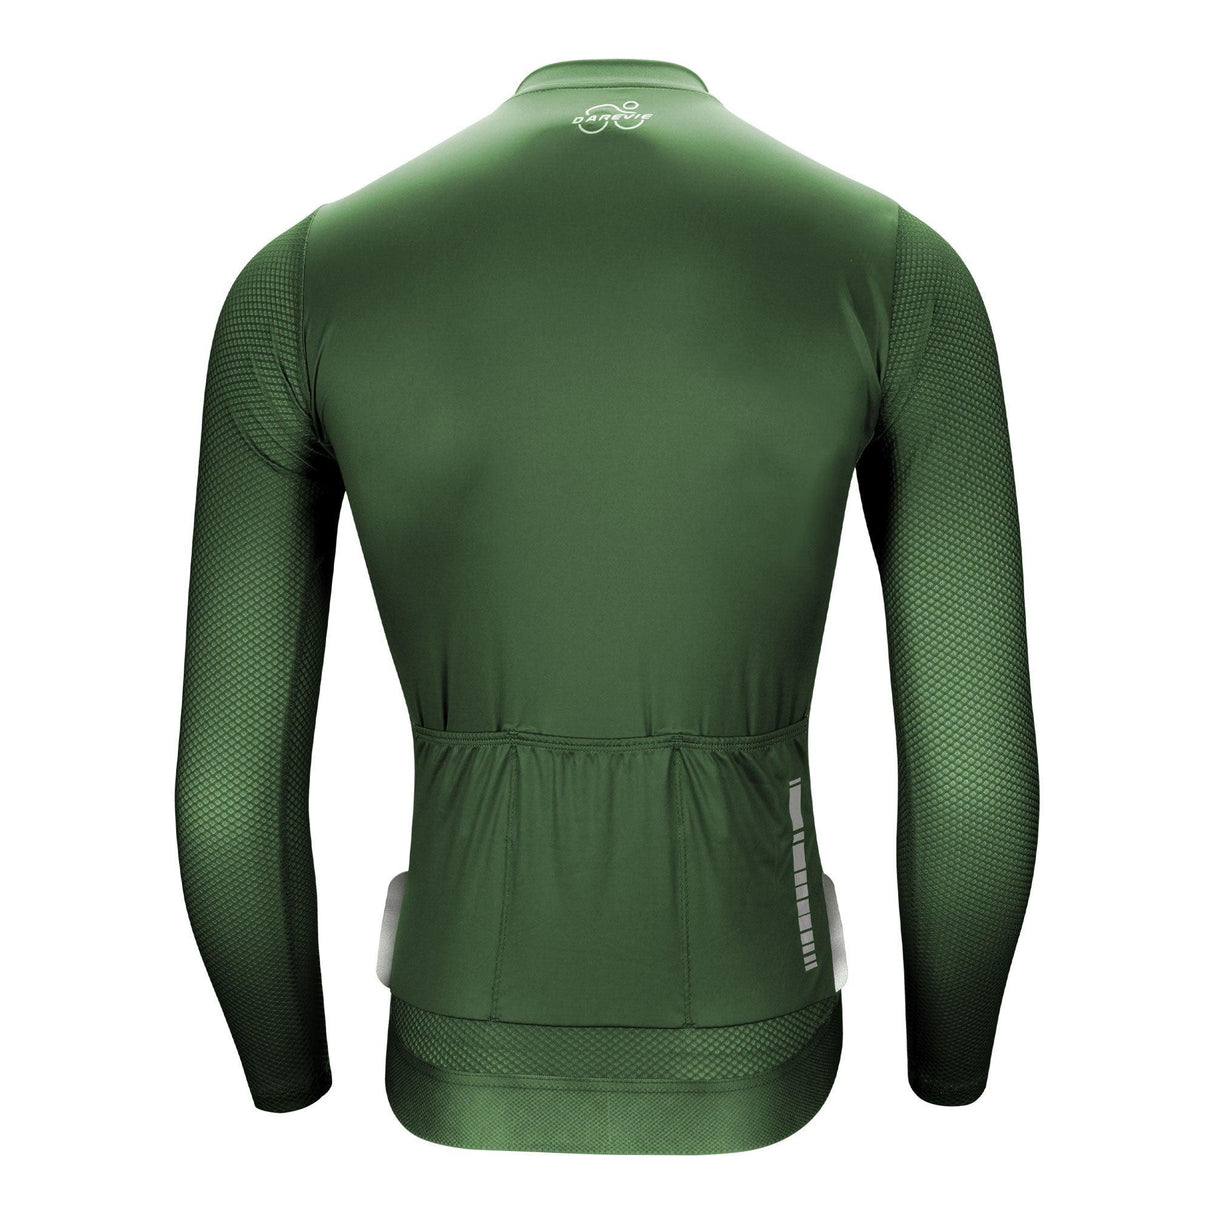 Green LIFTTINT Long Sleeves JERSEY - Back - Darevie Shop